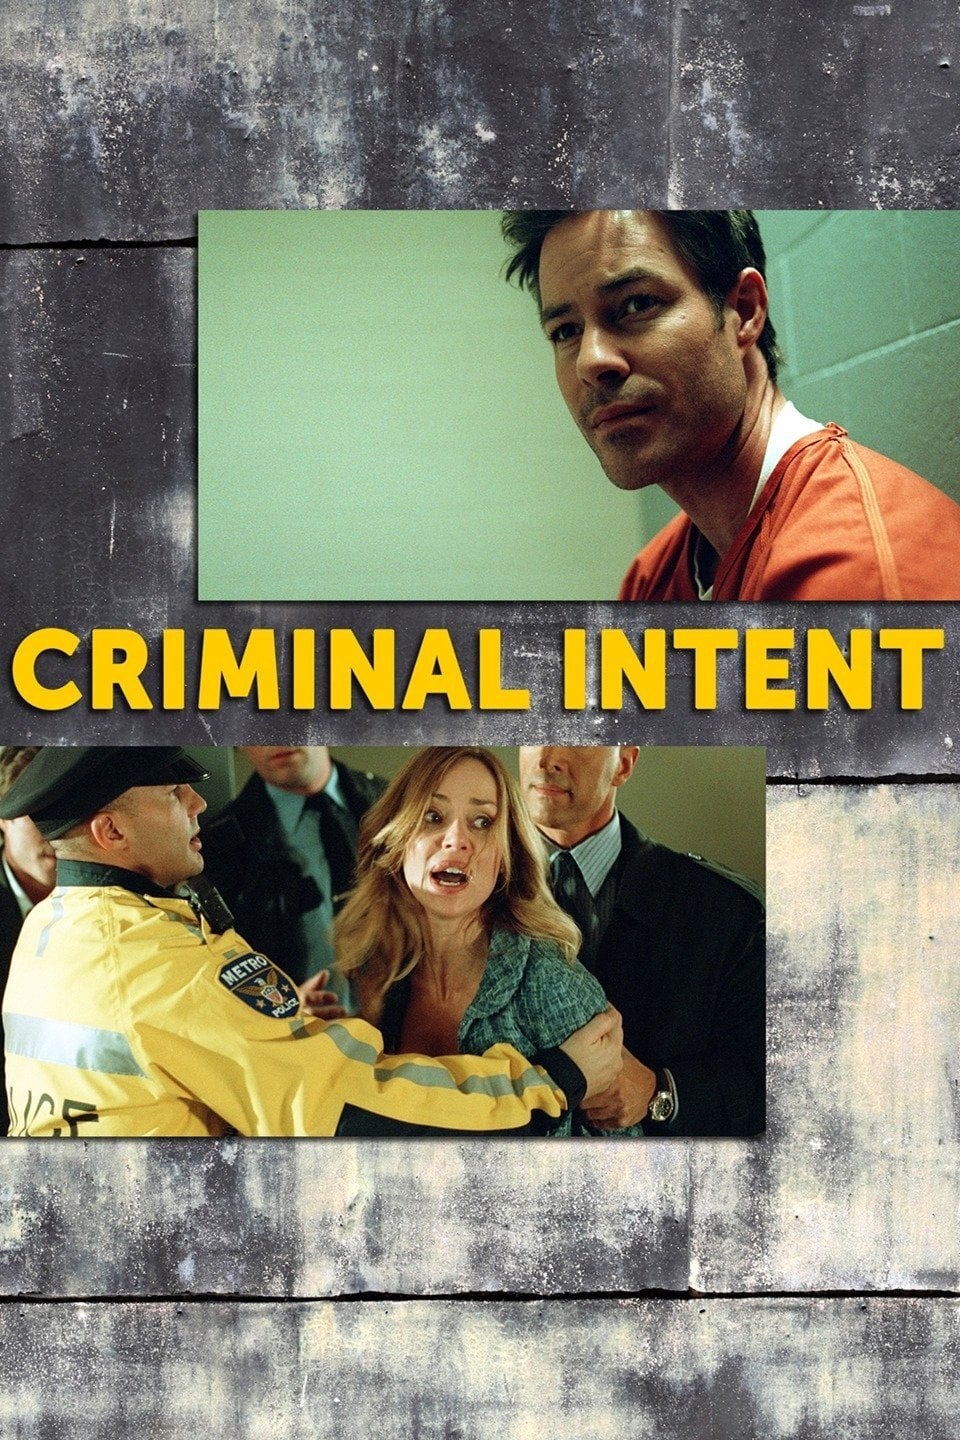 Criminal Intent (2005)